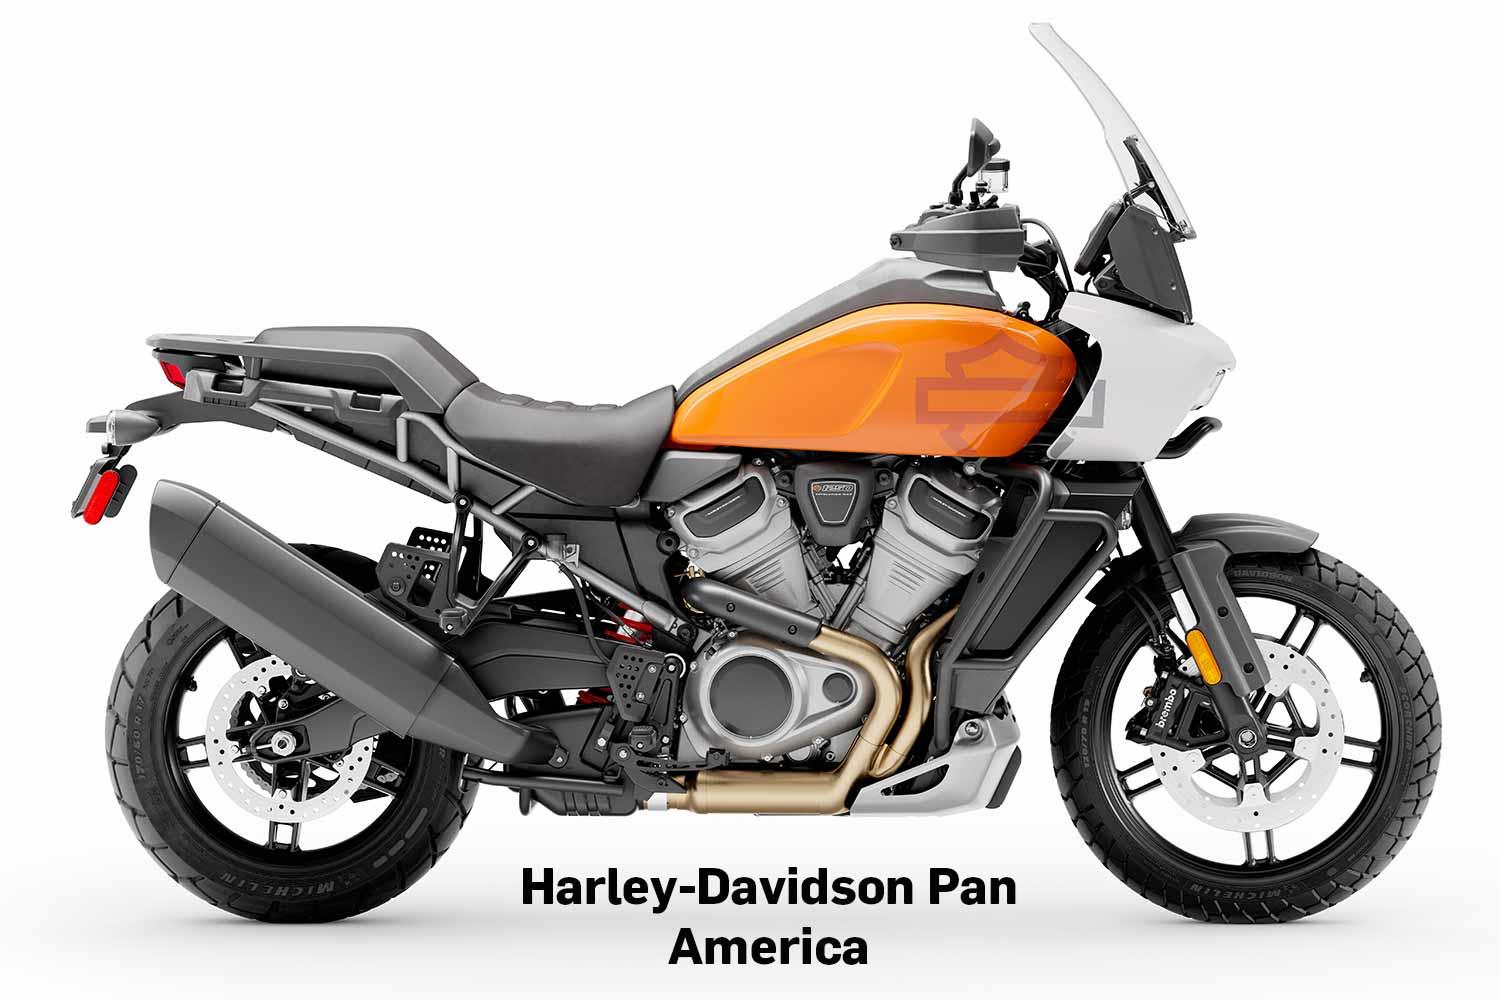 Harley-Davidson Pan America long-term test